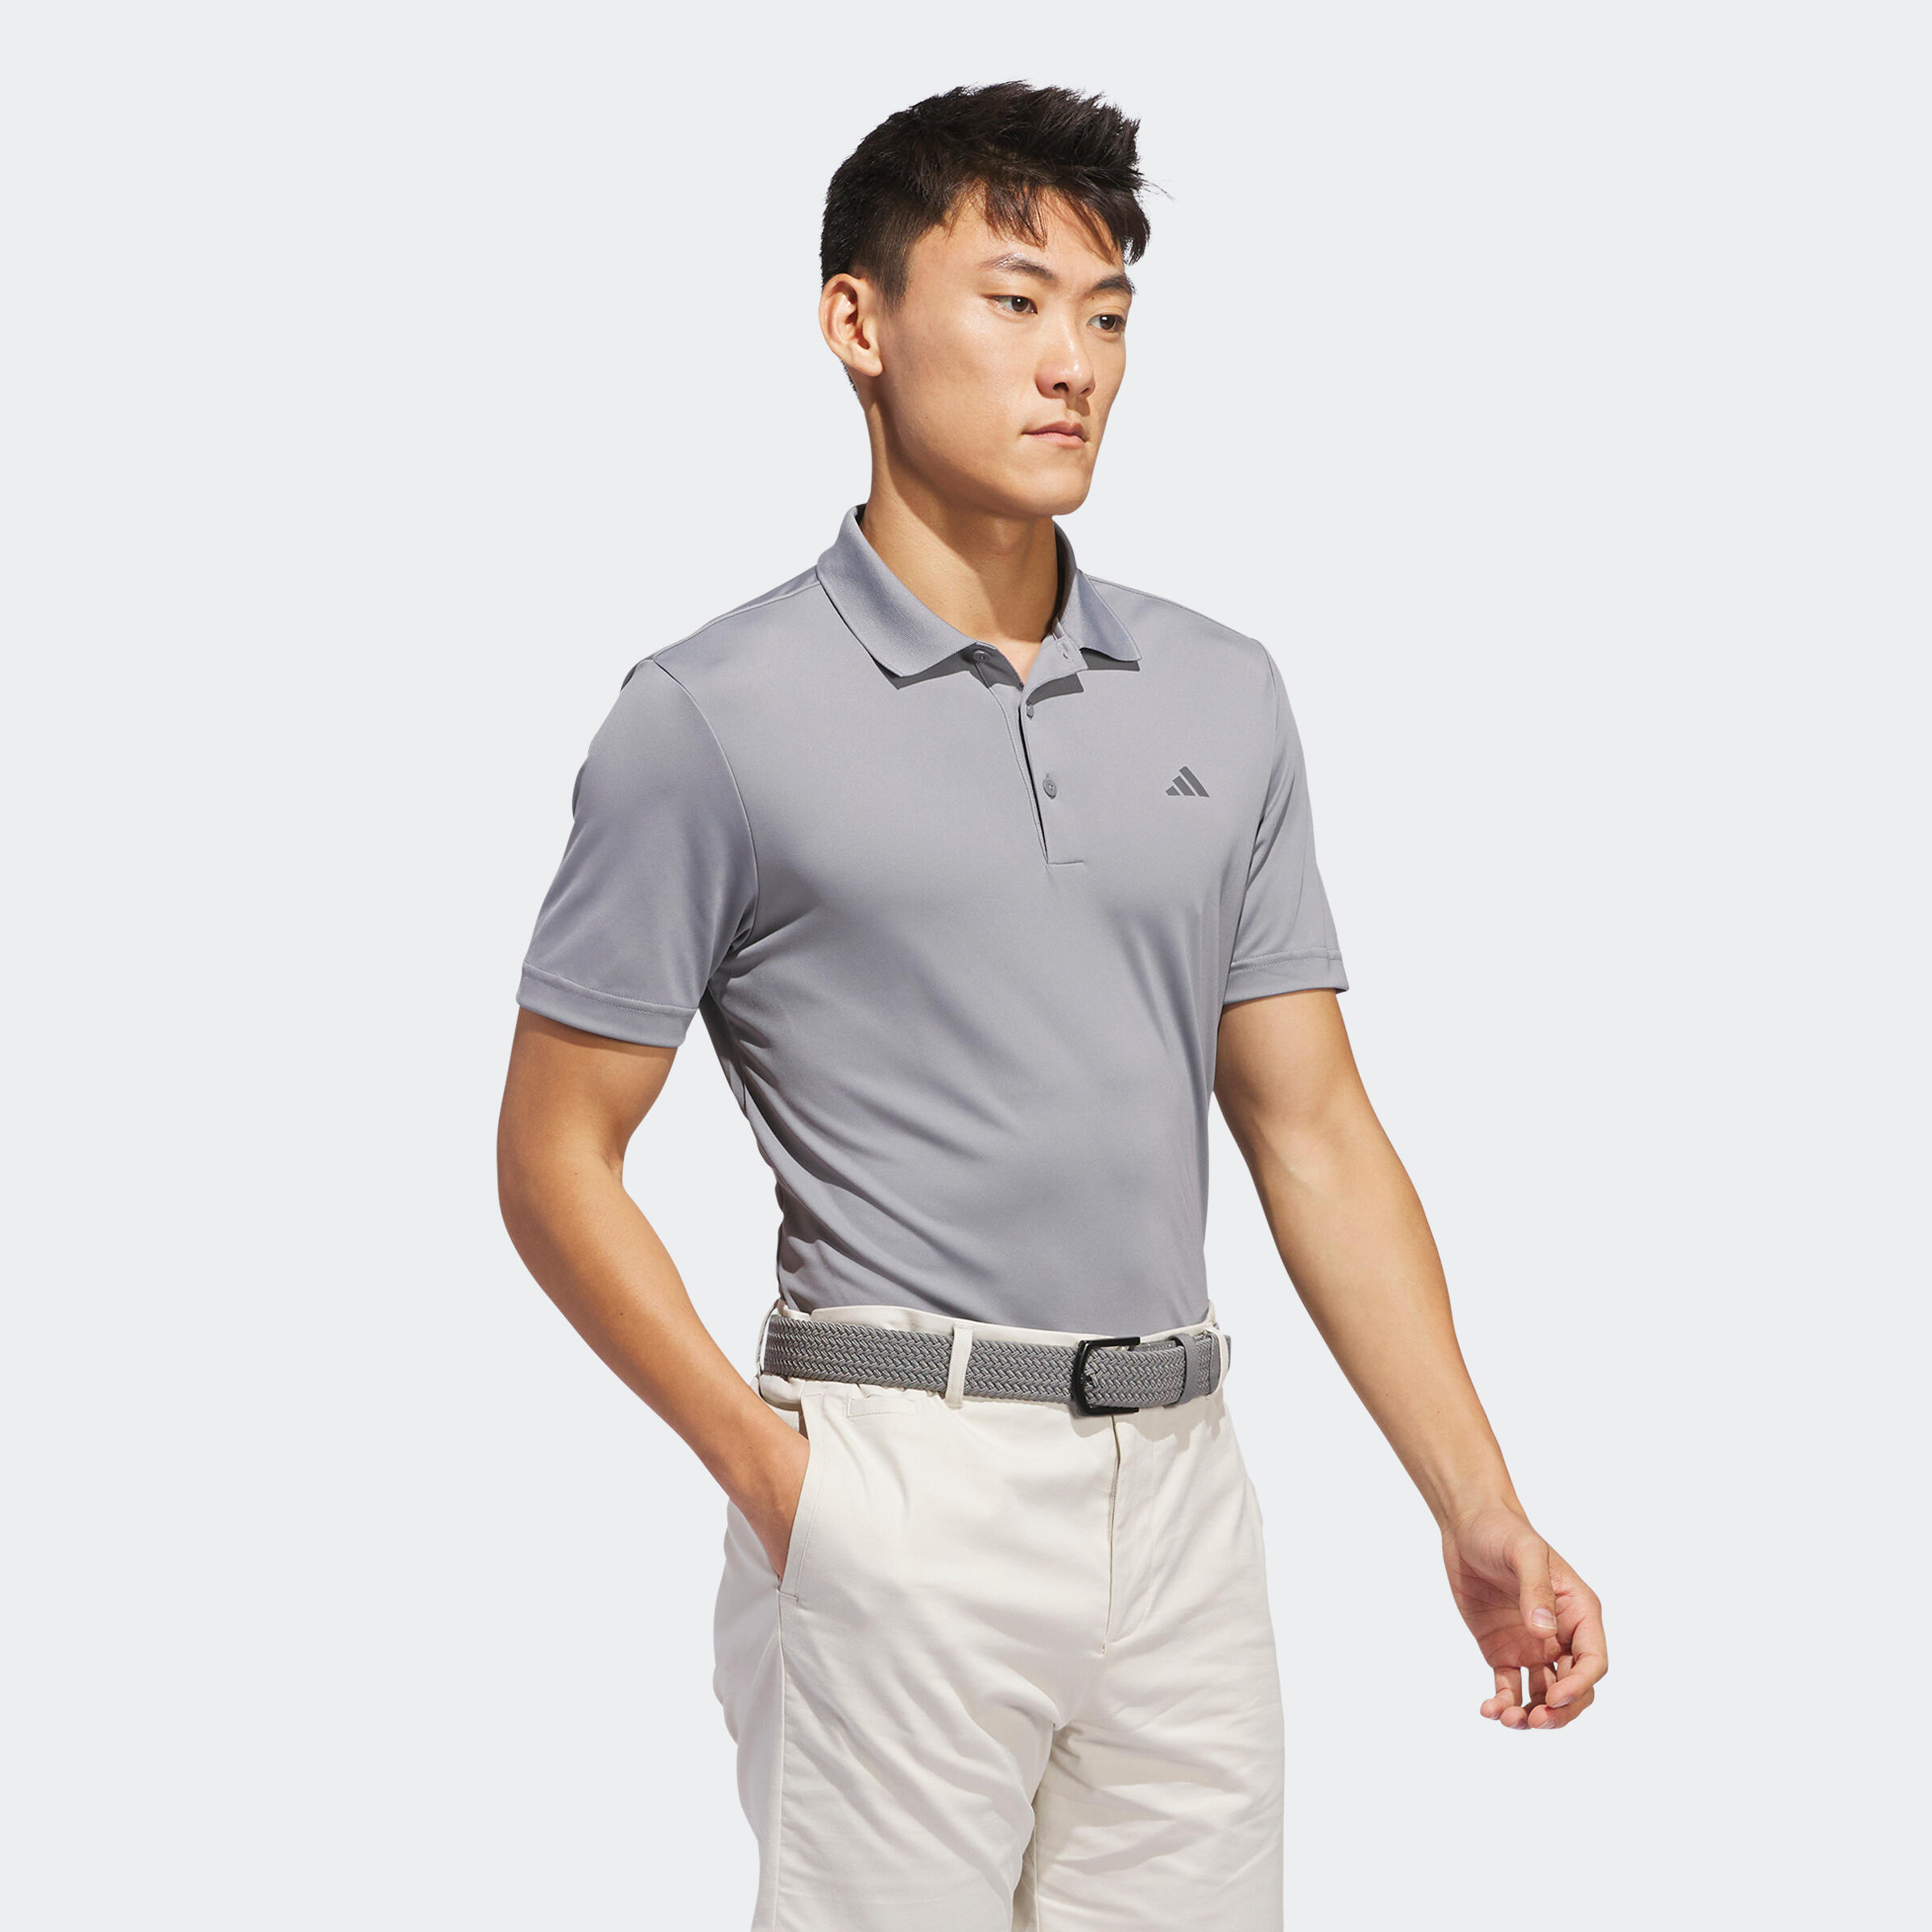 Men's golf short sleeve polo shirt - Adidas grey 1/4